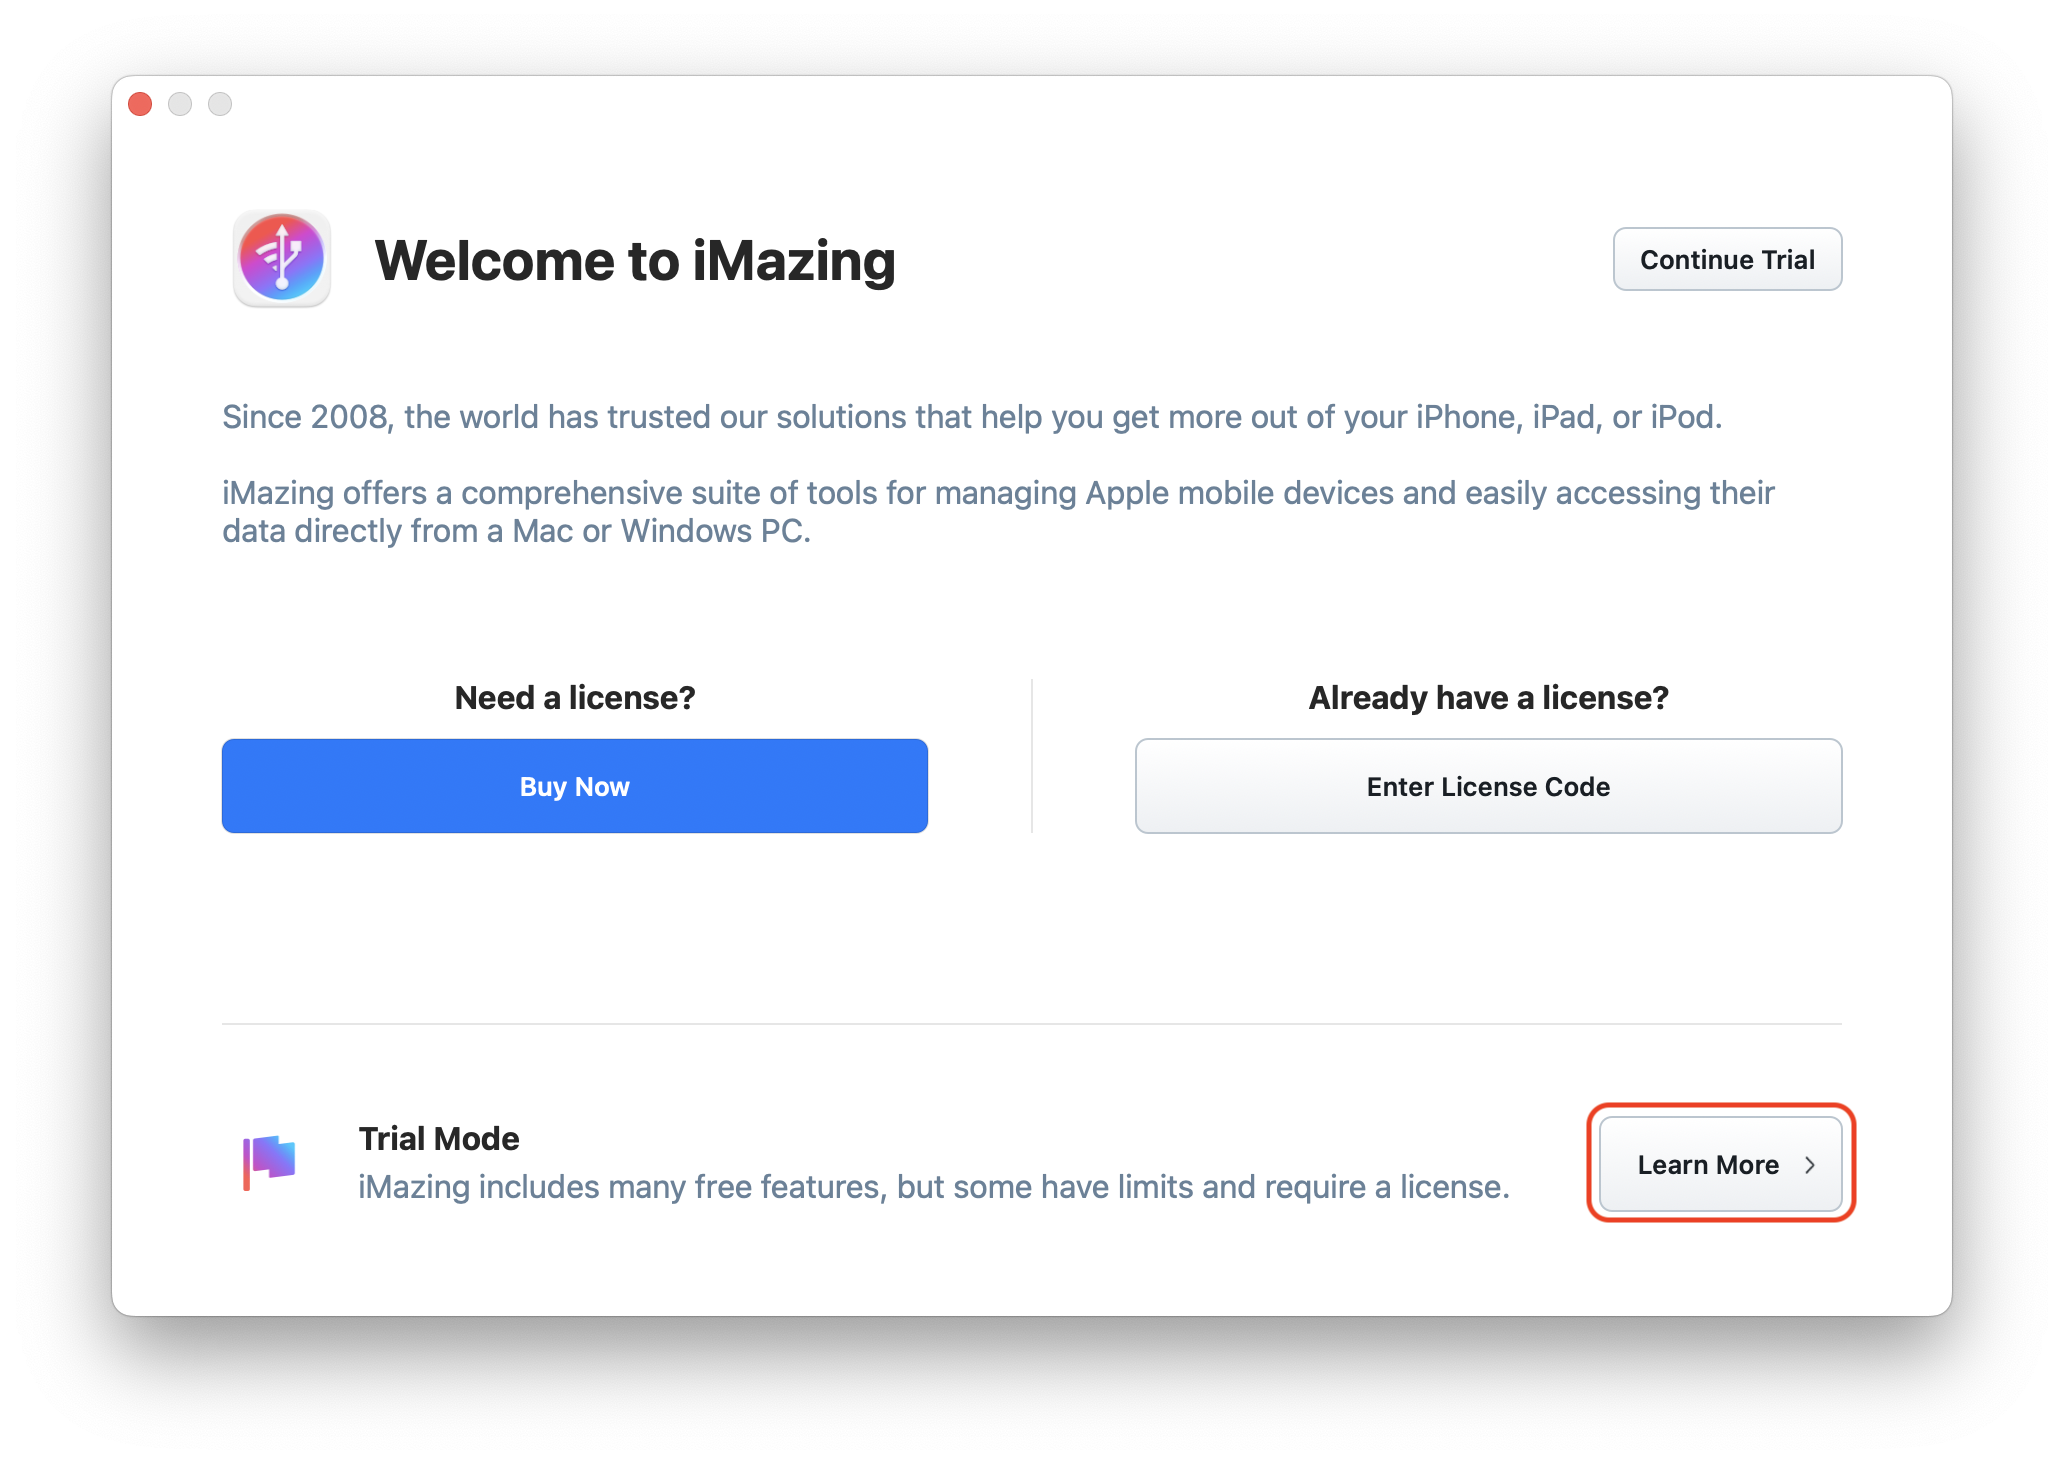 iMazing Welcome Screen - Learn More